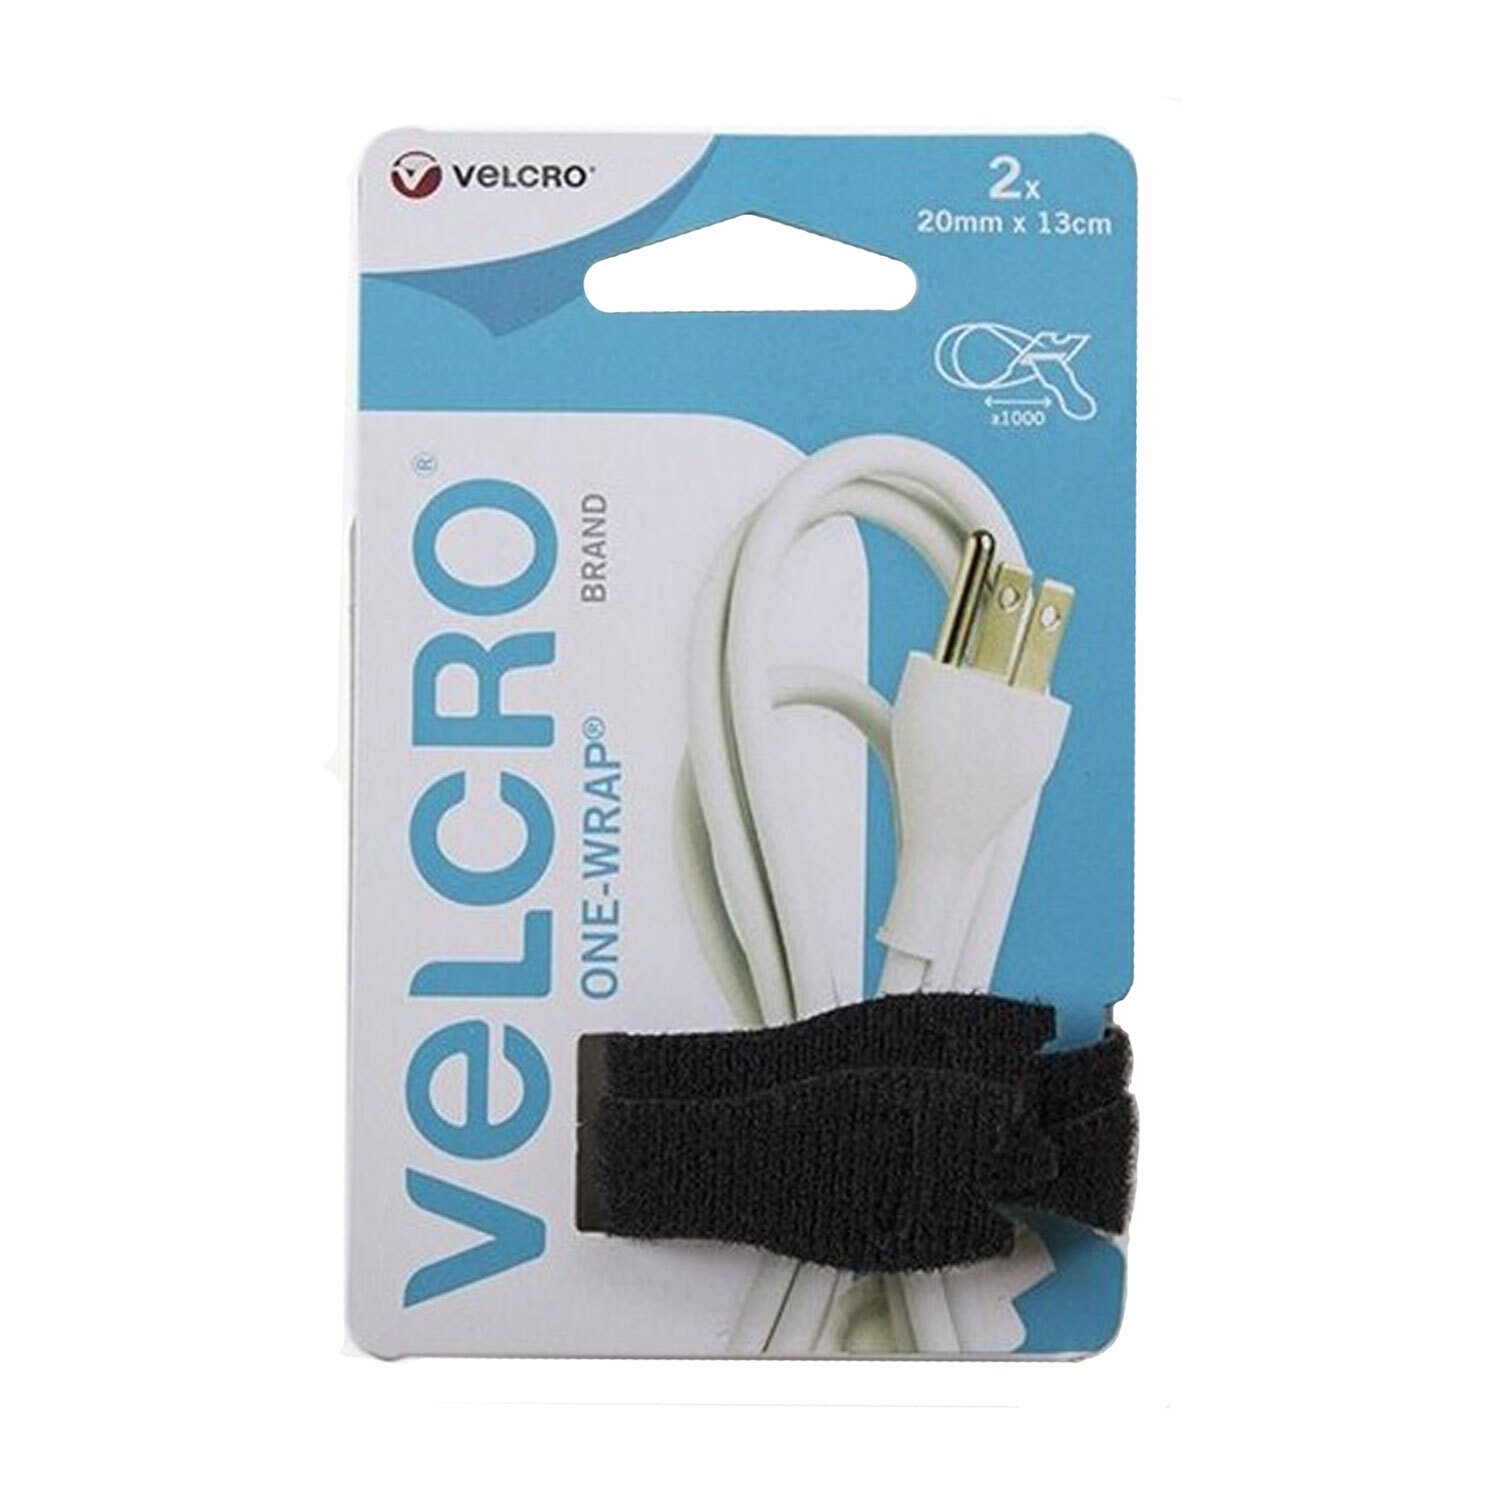 Velcro One Wrap Black 20mm x 13cm Hook and Loop 2 Pack Image